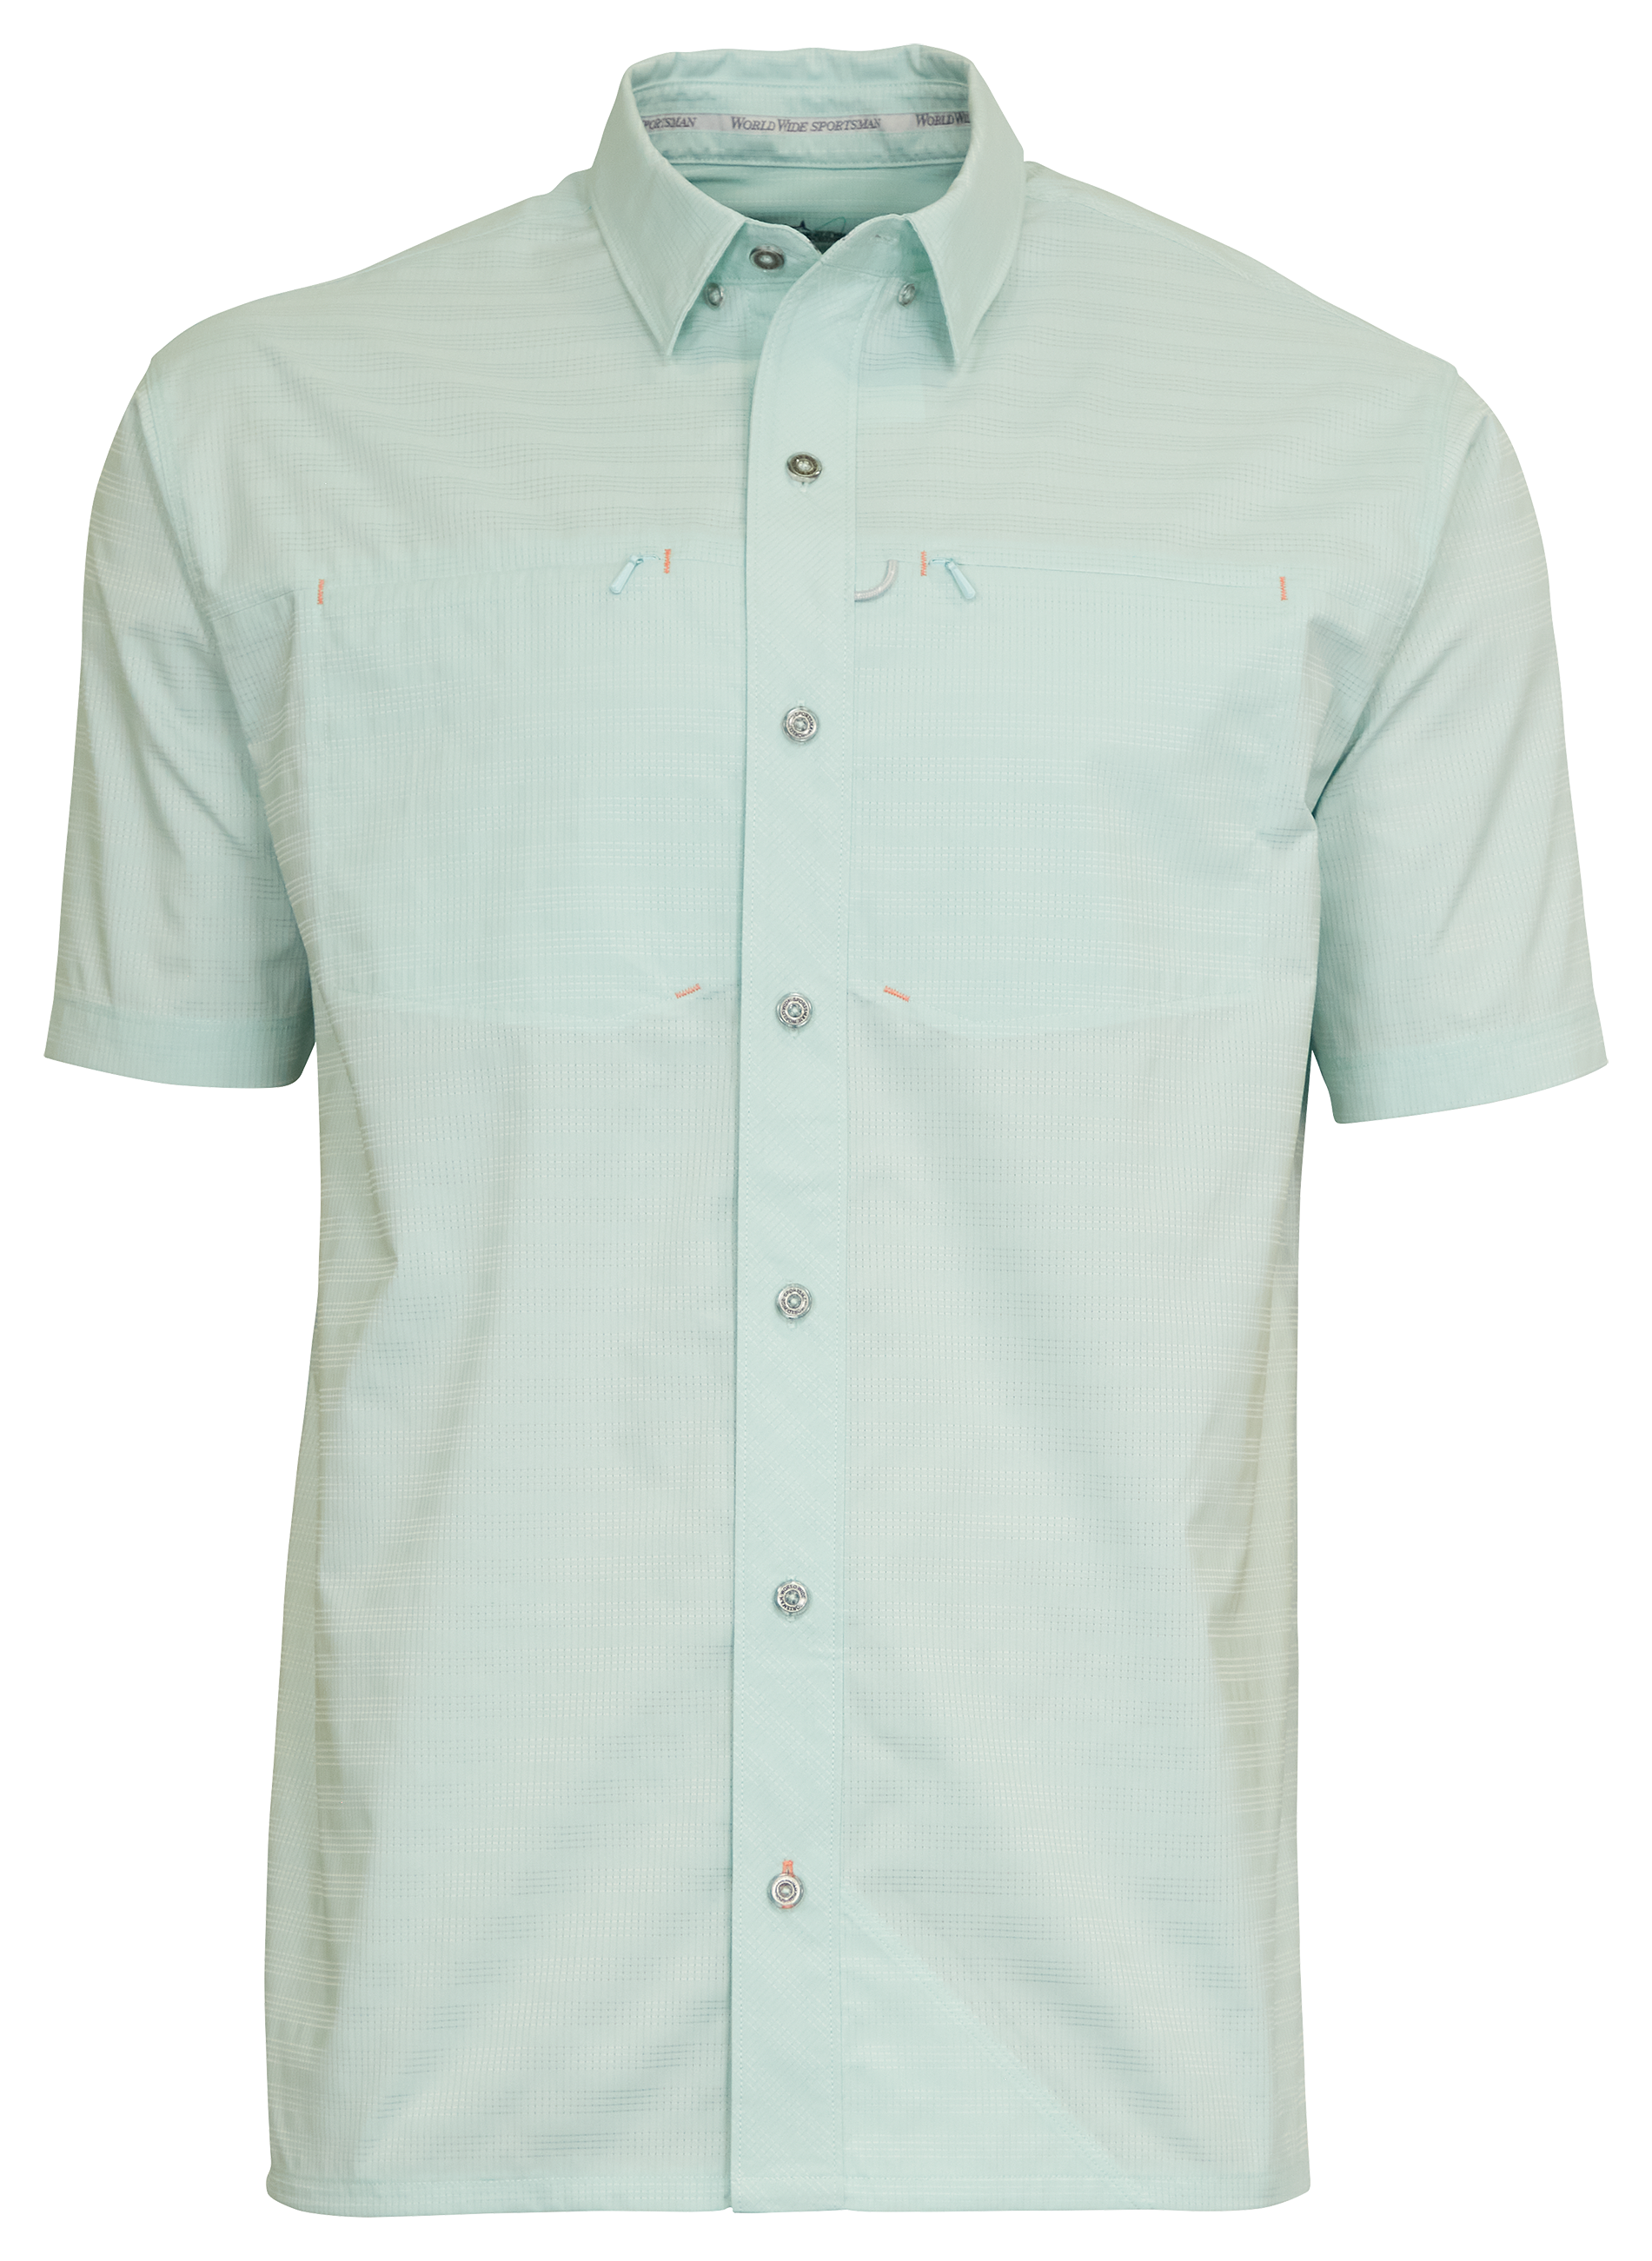 World Wide Sportsman Seacrest 2-Pocket Short-Sleeve Button-Down Shirt for Men - Harbor Gray - 3XL